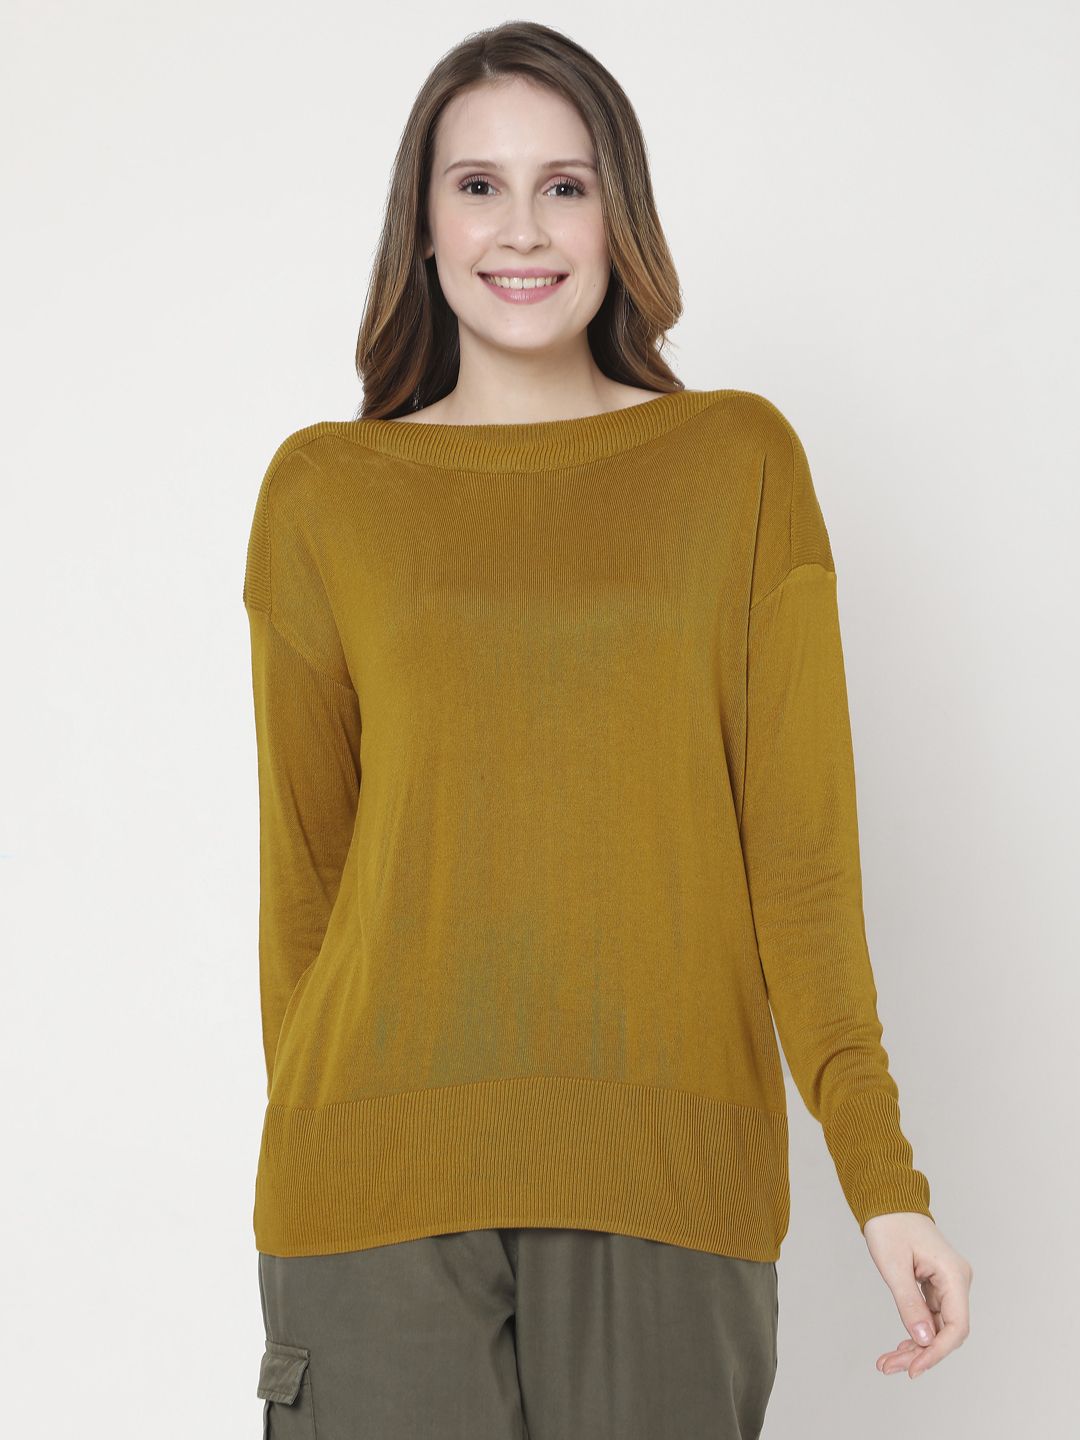 Vero Moda Women Brown Solid Pullover Sweater Price in India